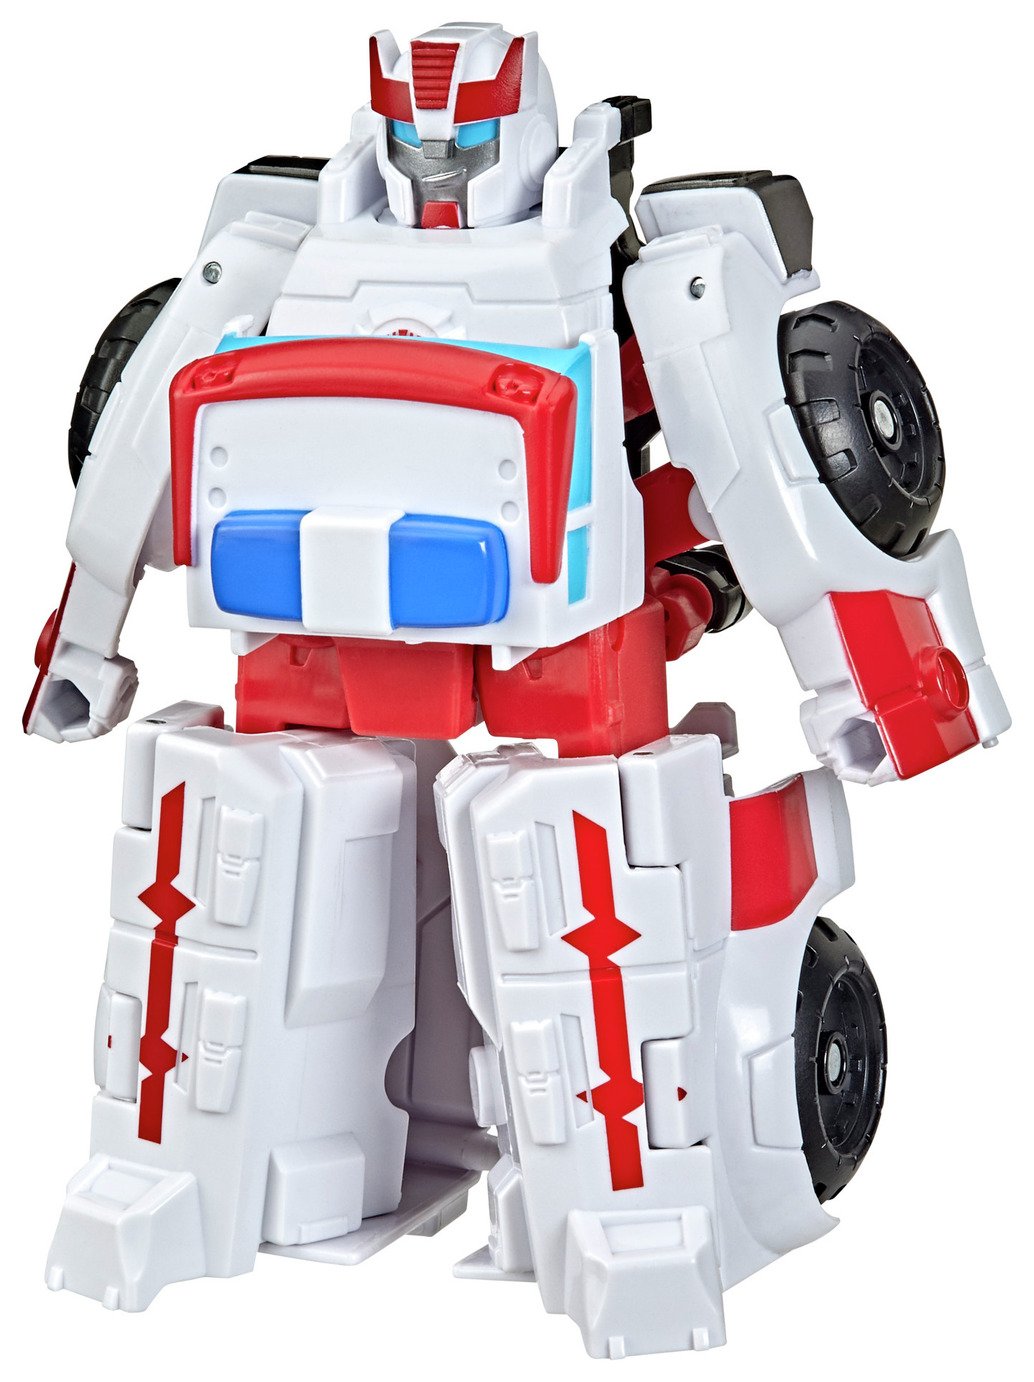 Transformers Rescue Bots Assortment